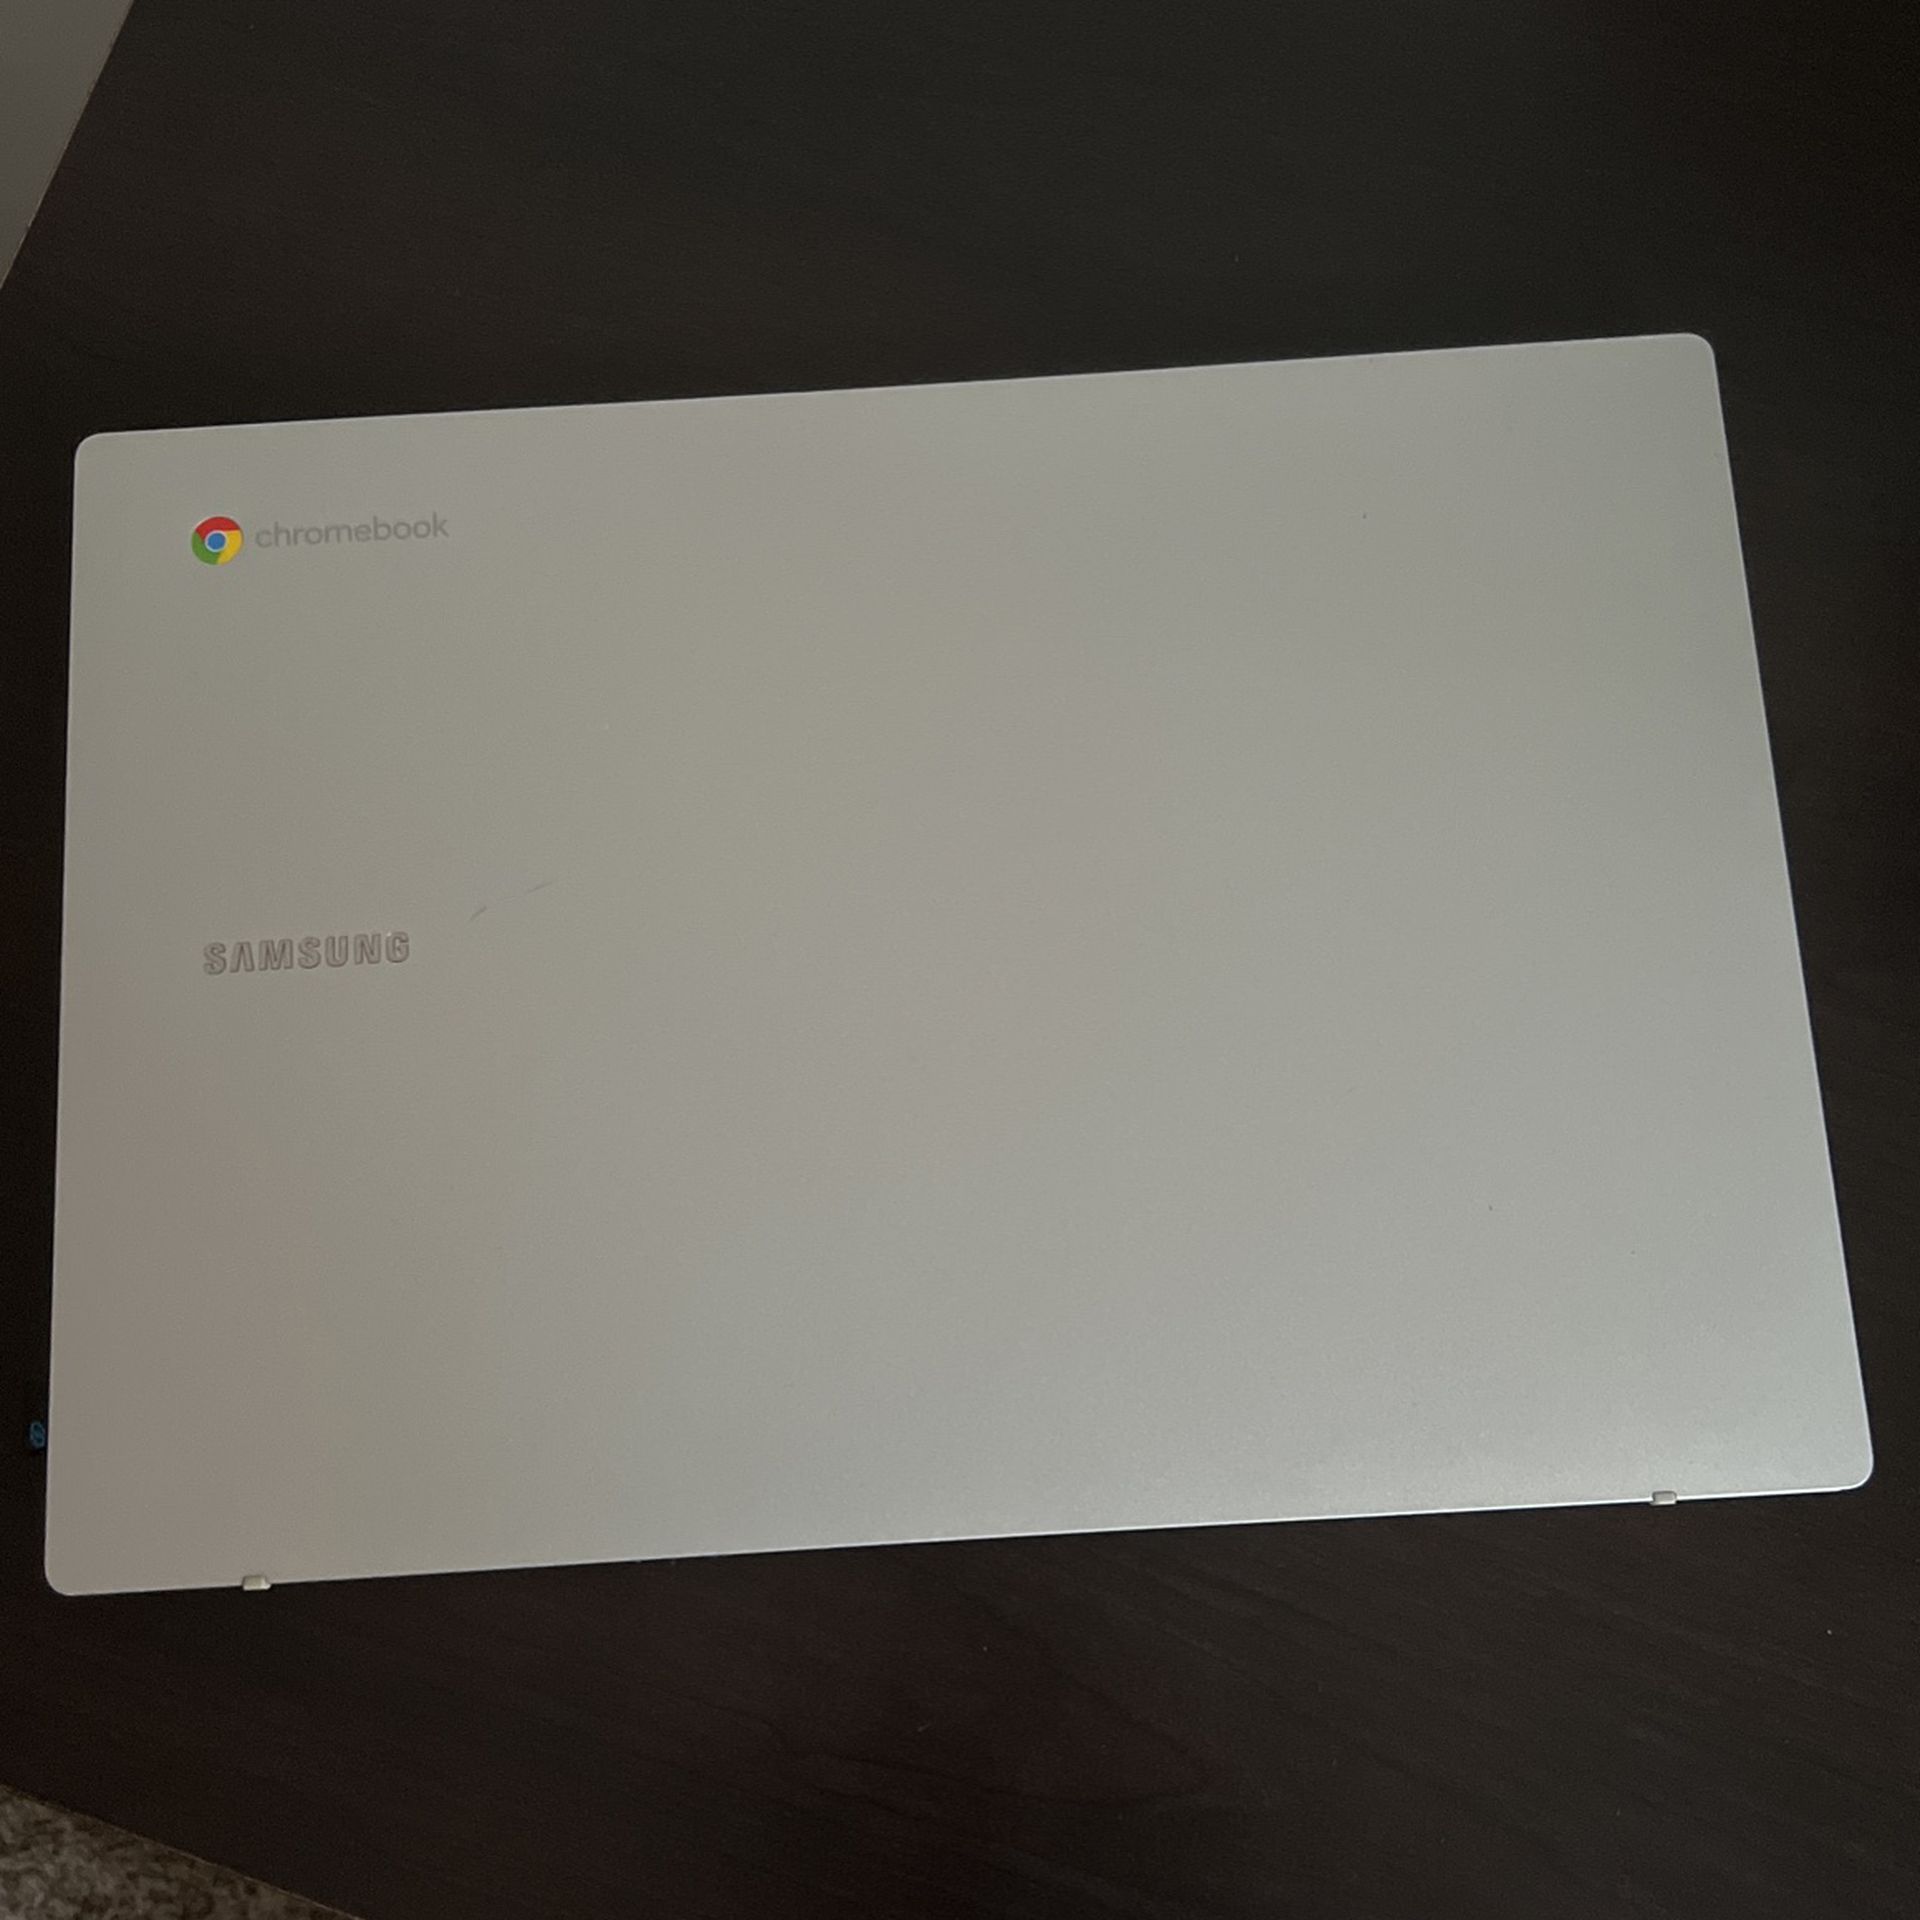  Chromebook Laptop